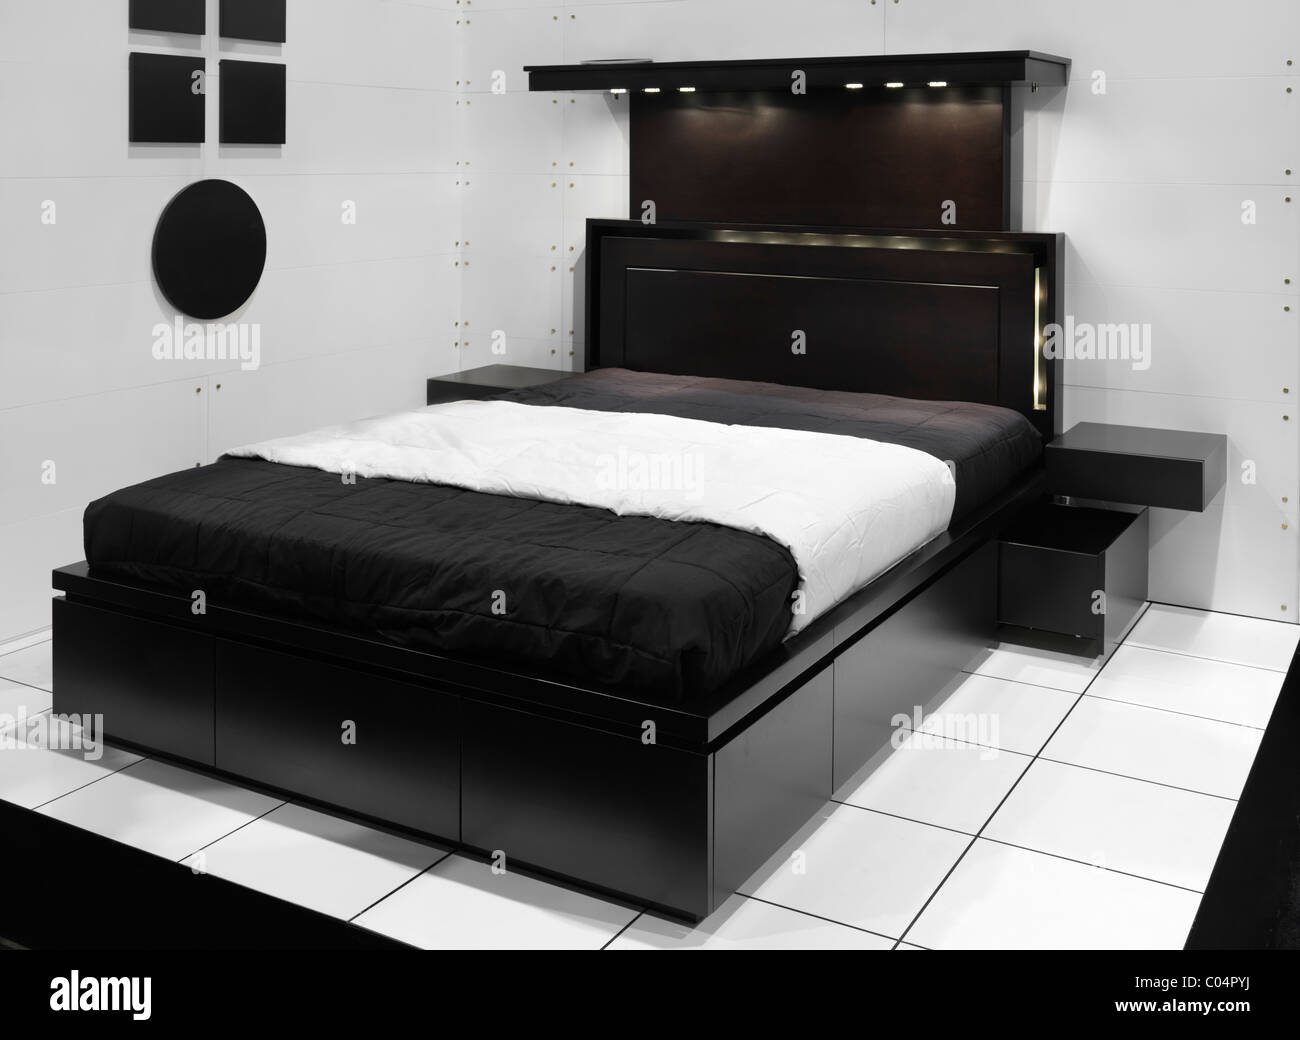 Stylish contemporary bedroom interior design display Stock Photo